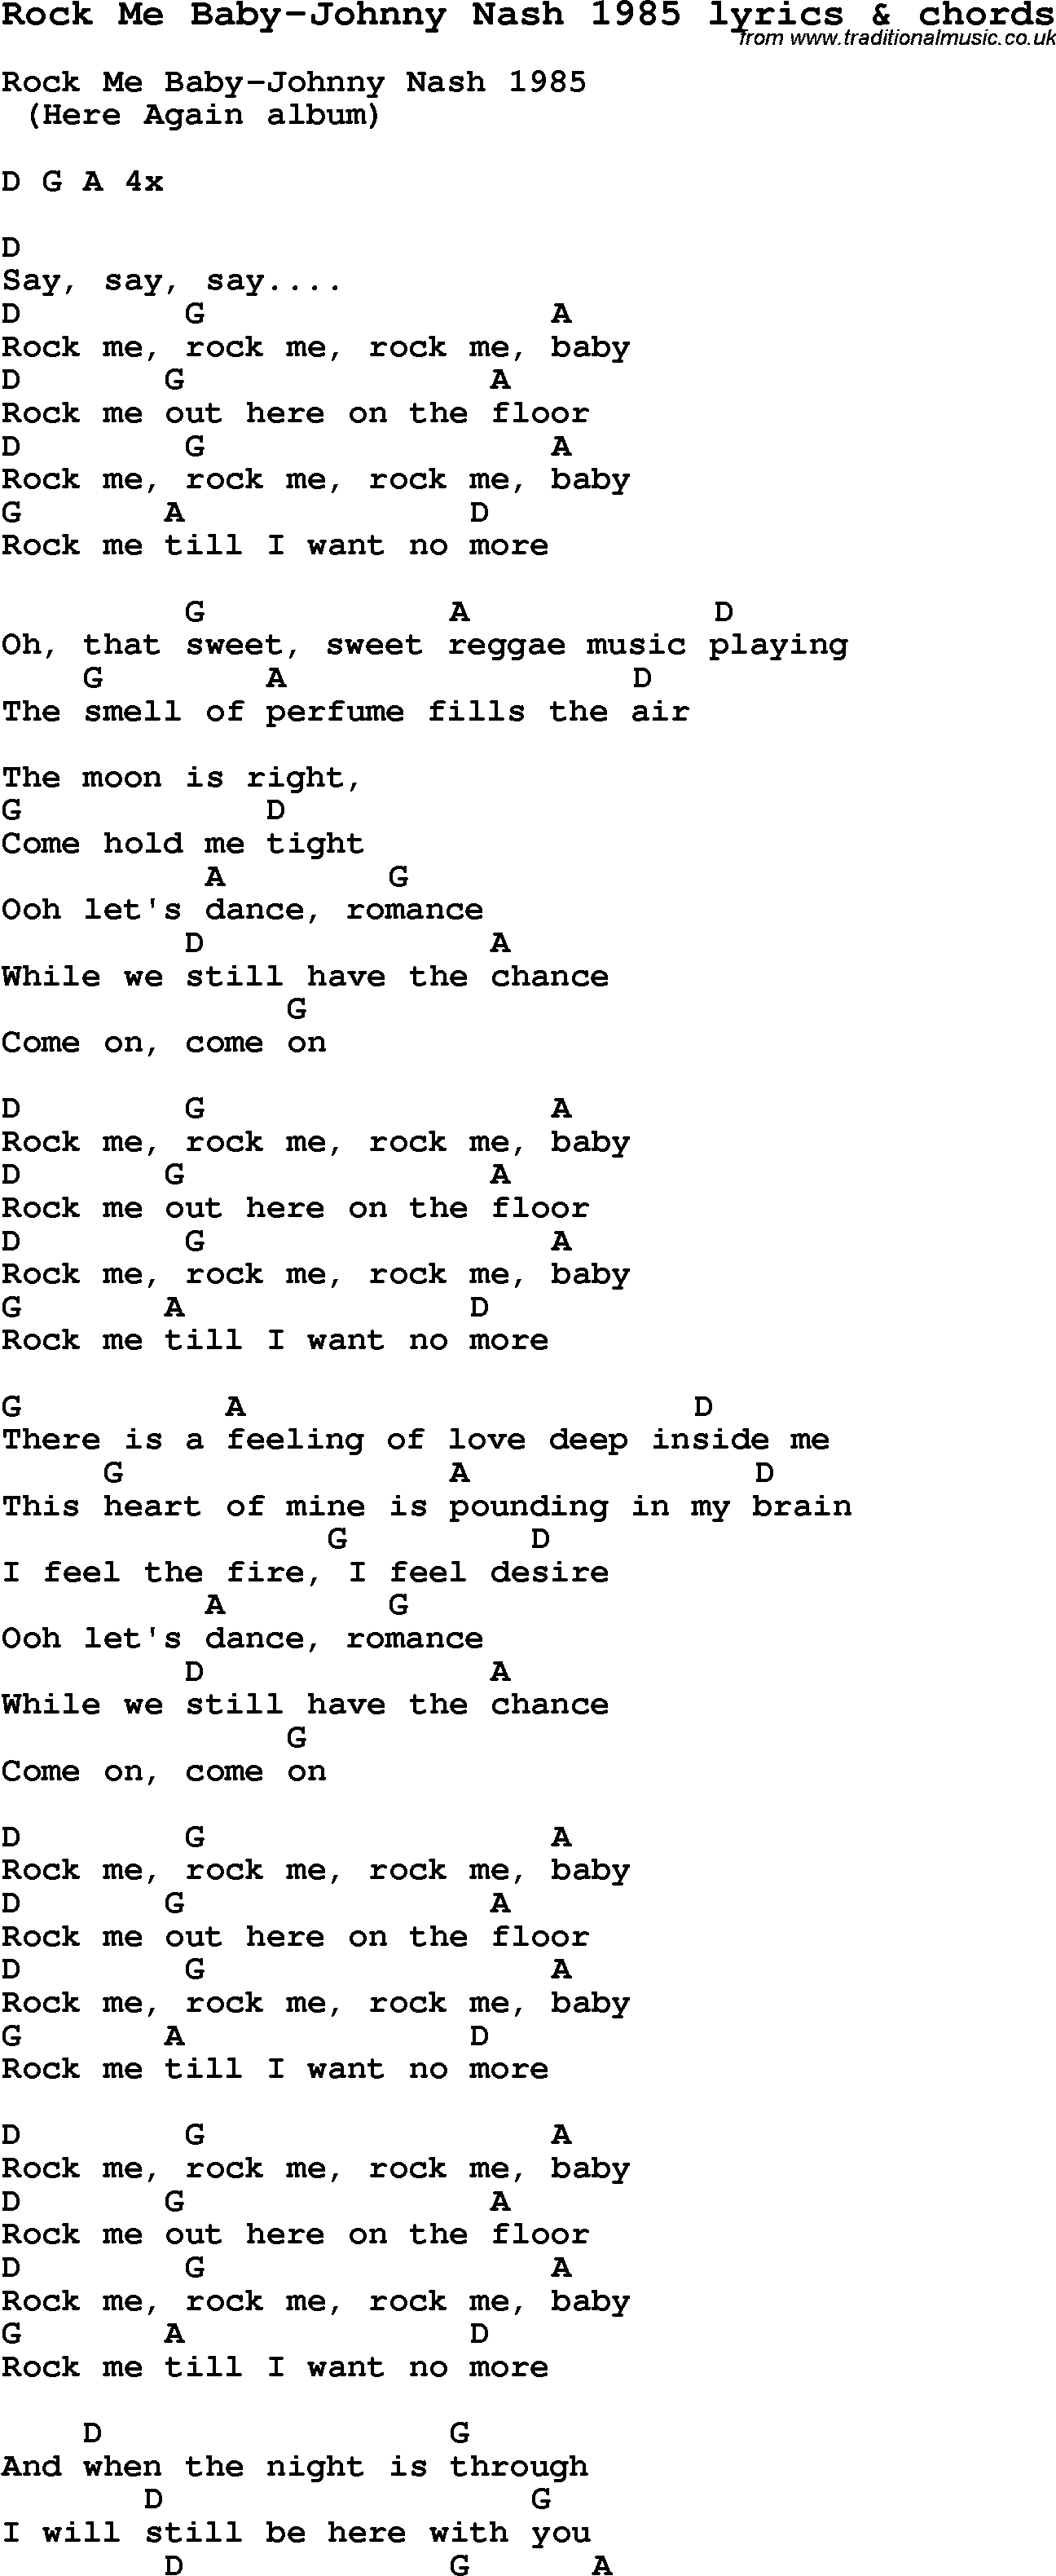 Love Song Lyrics for: Rock Me Baby-Johnny Nash 1985 with chords for Ukulele, Guitar Banjo etc.